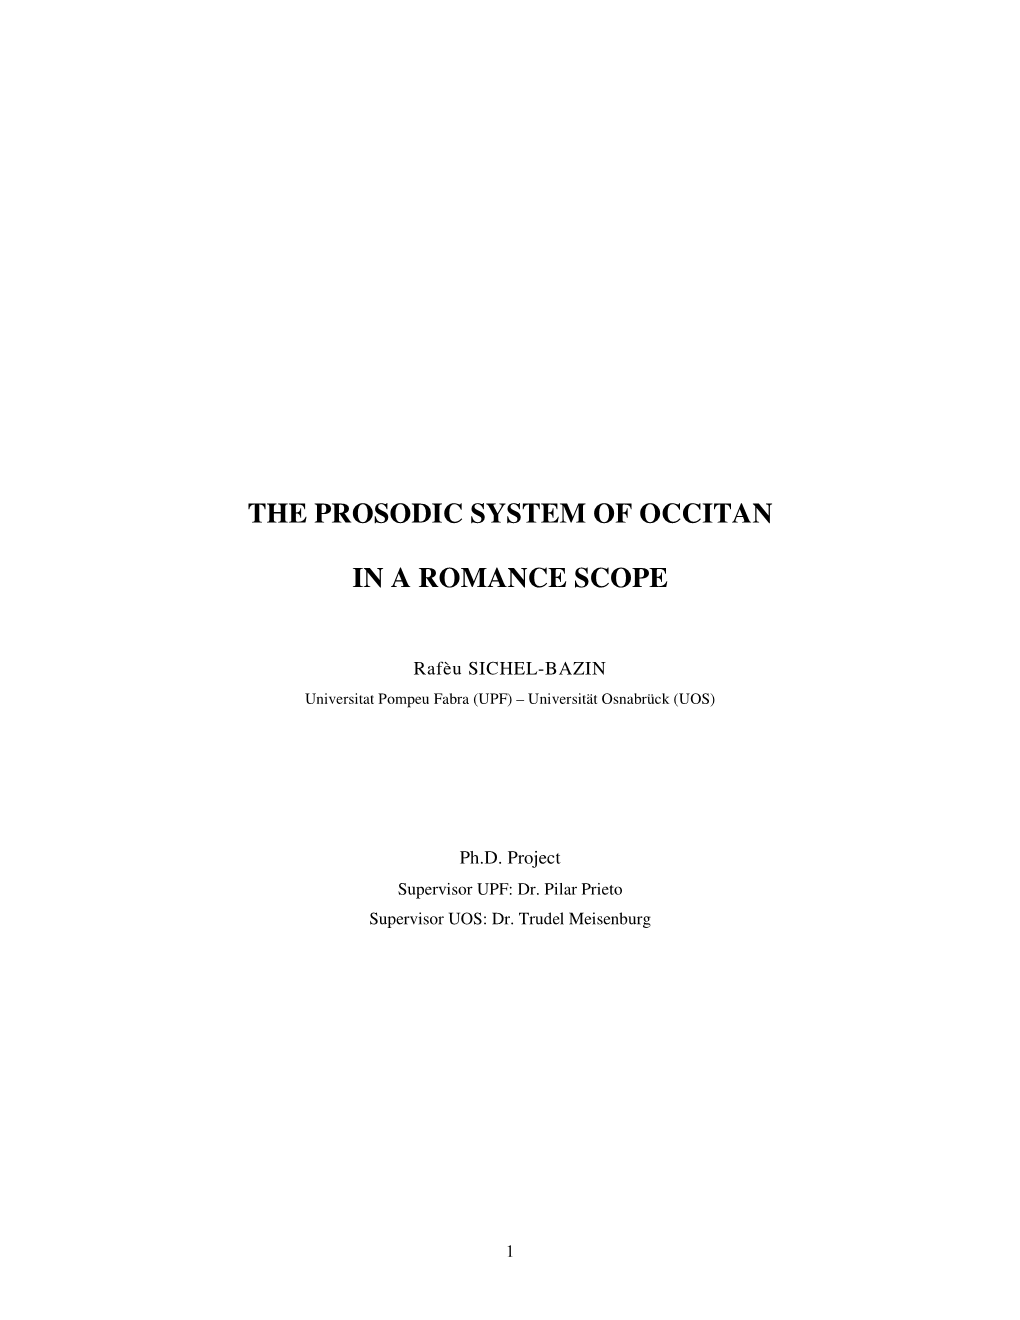 The Prosodic System of Occitan in a Romance Scope